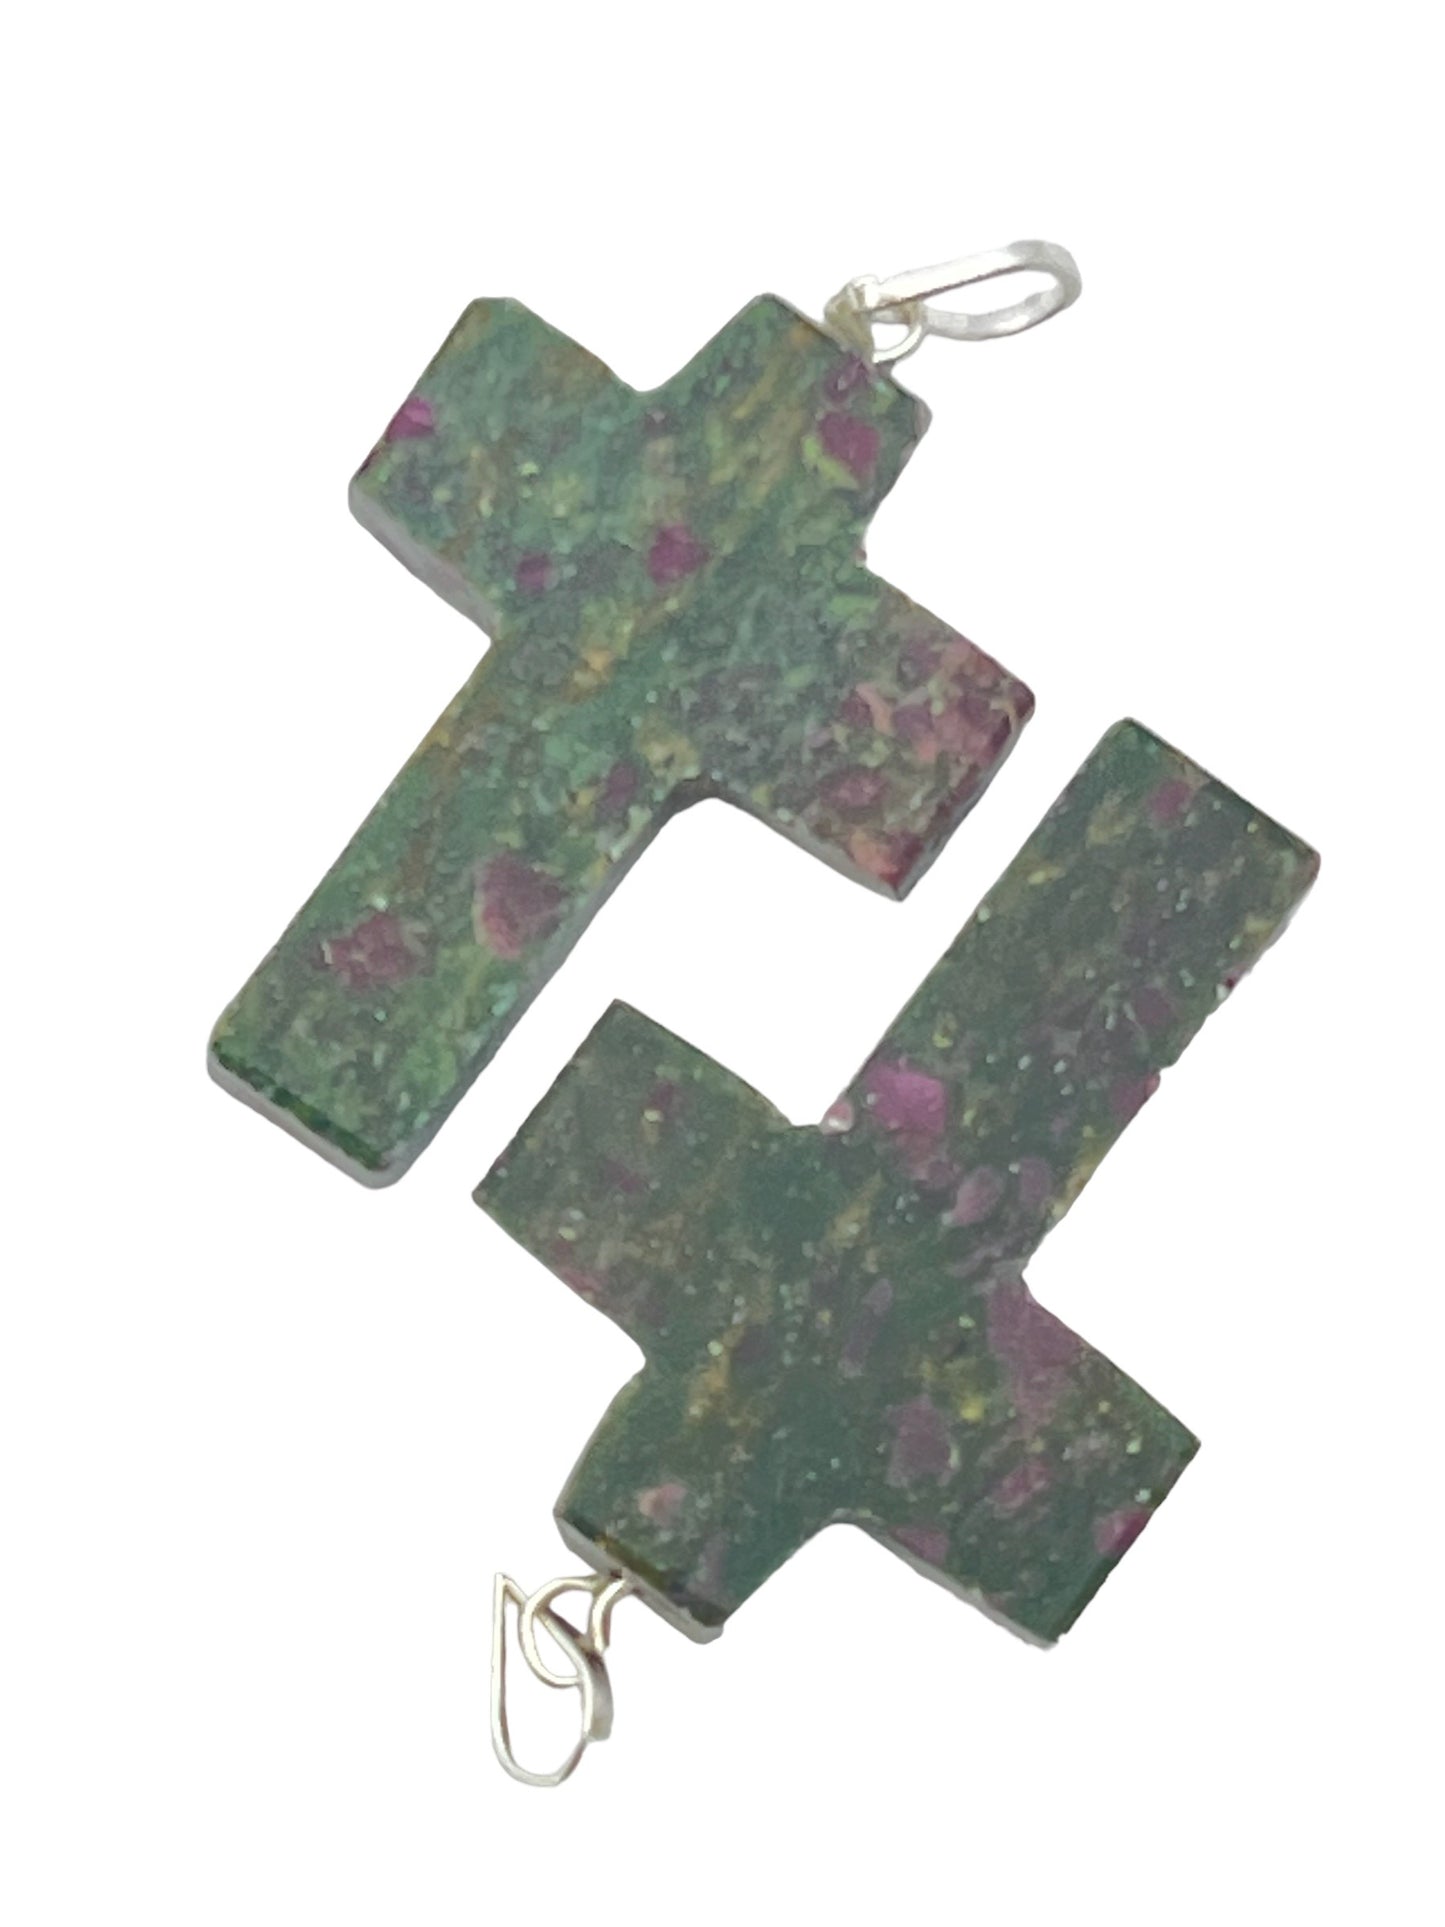 Gemstone Cross-Shaped Pendant - Ruby Zoisite (2-Pack)